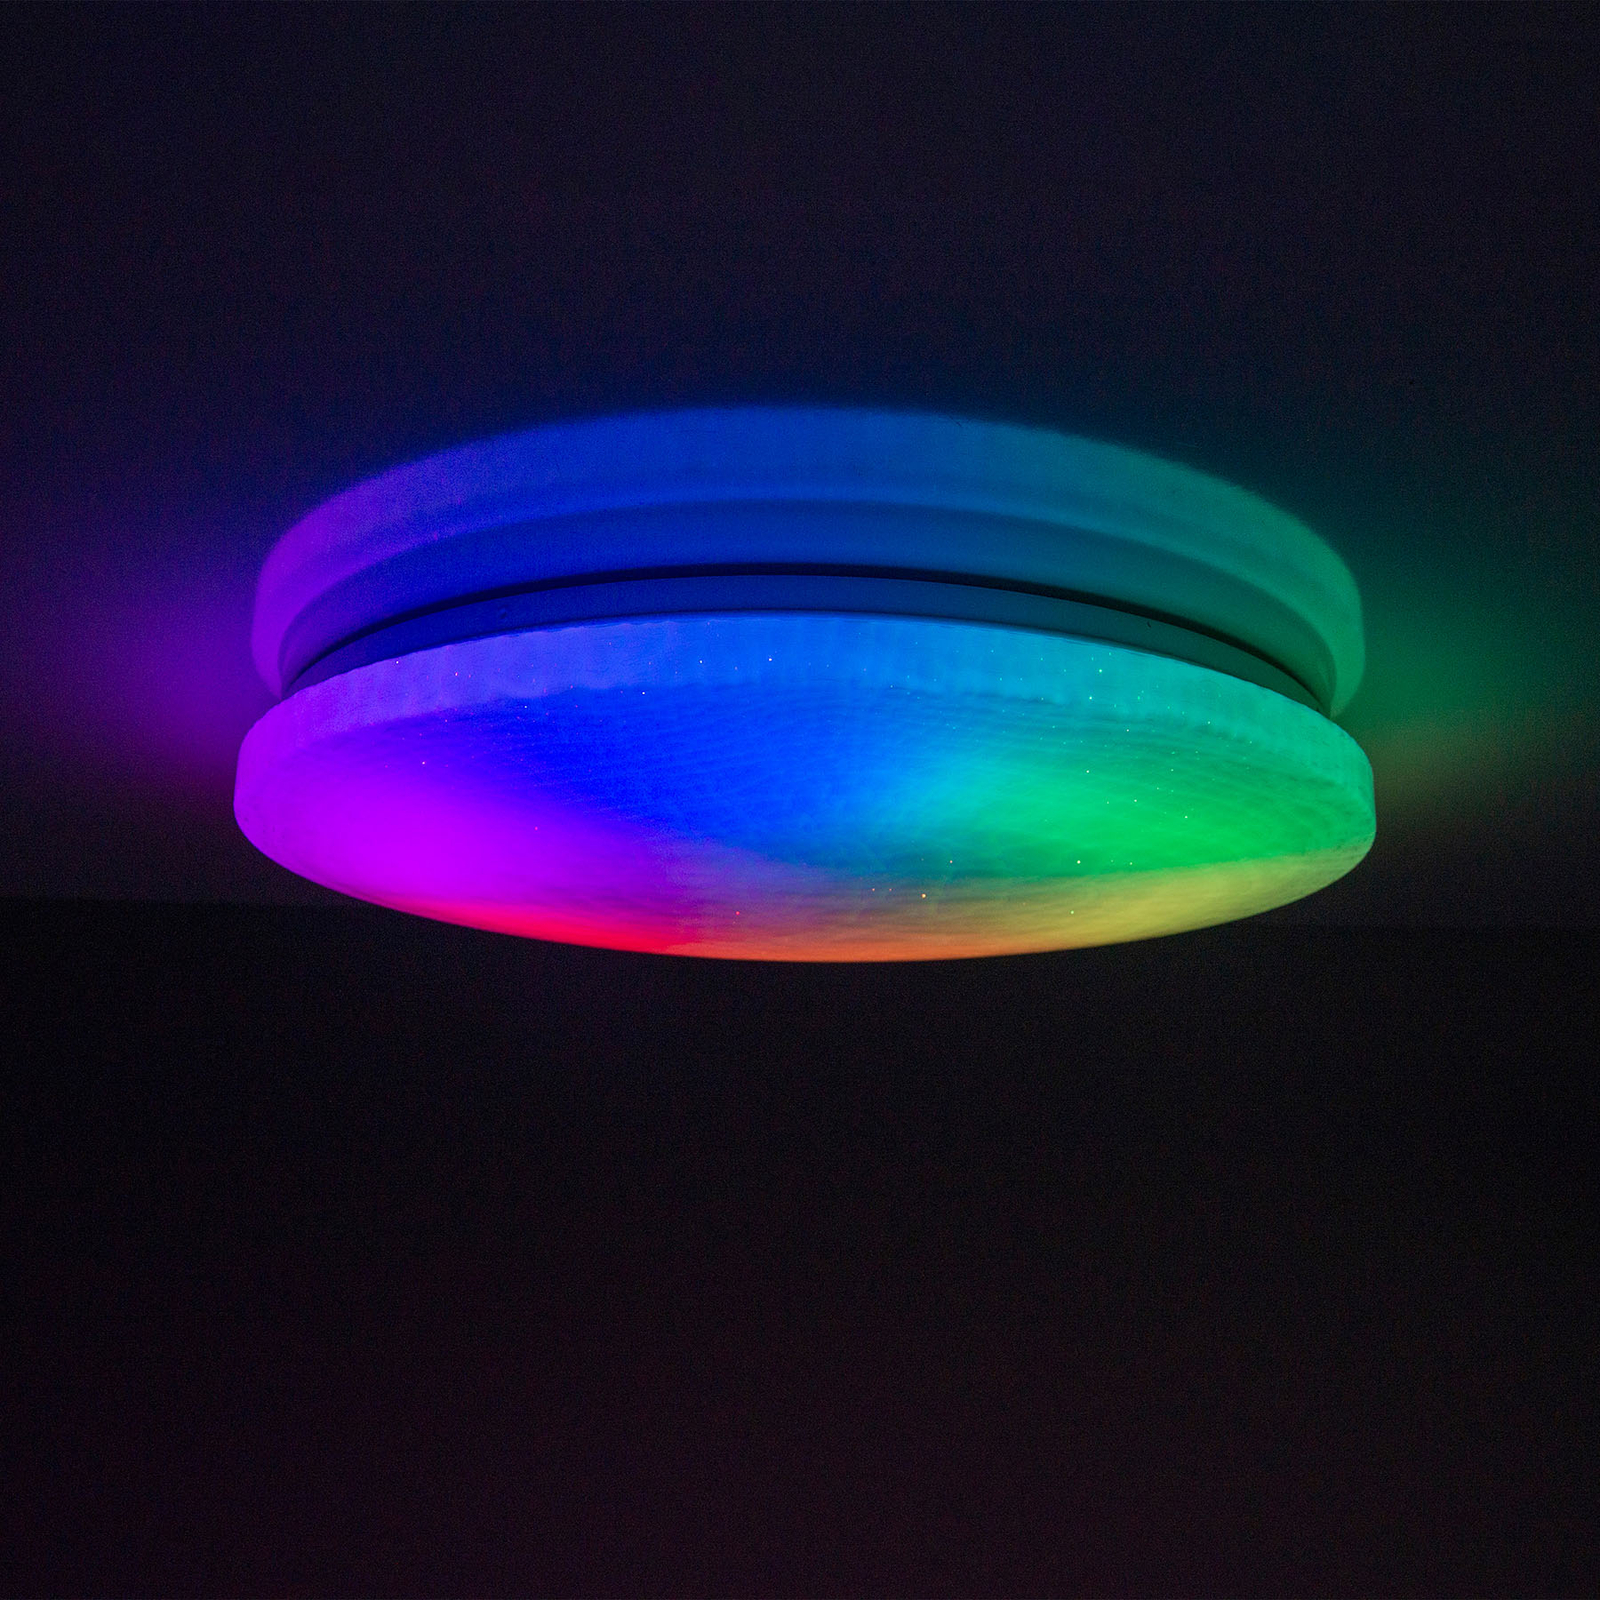 Sligo LED ceiling light dimmable RGBW, night light